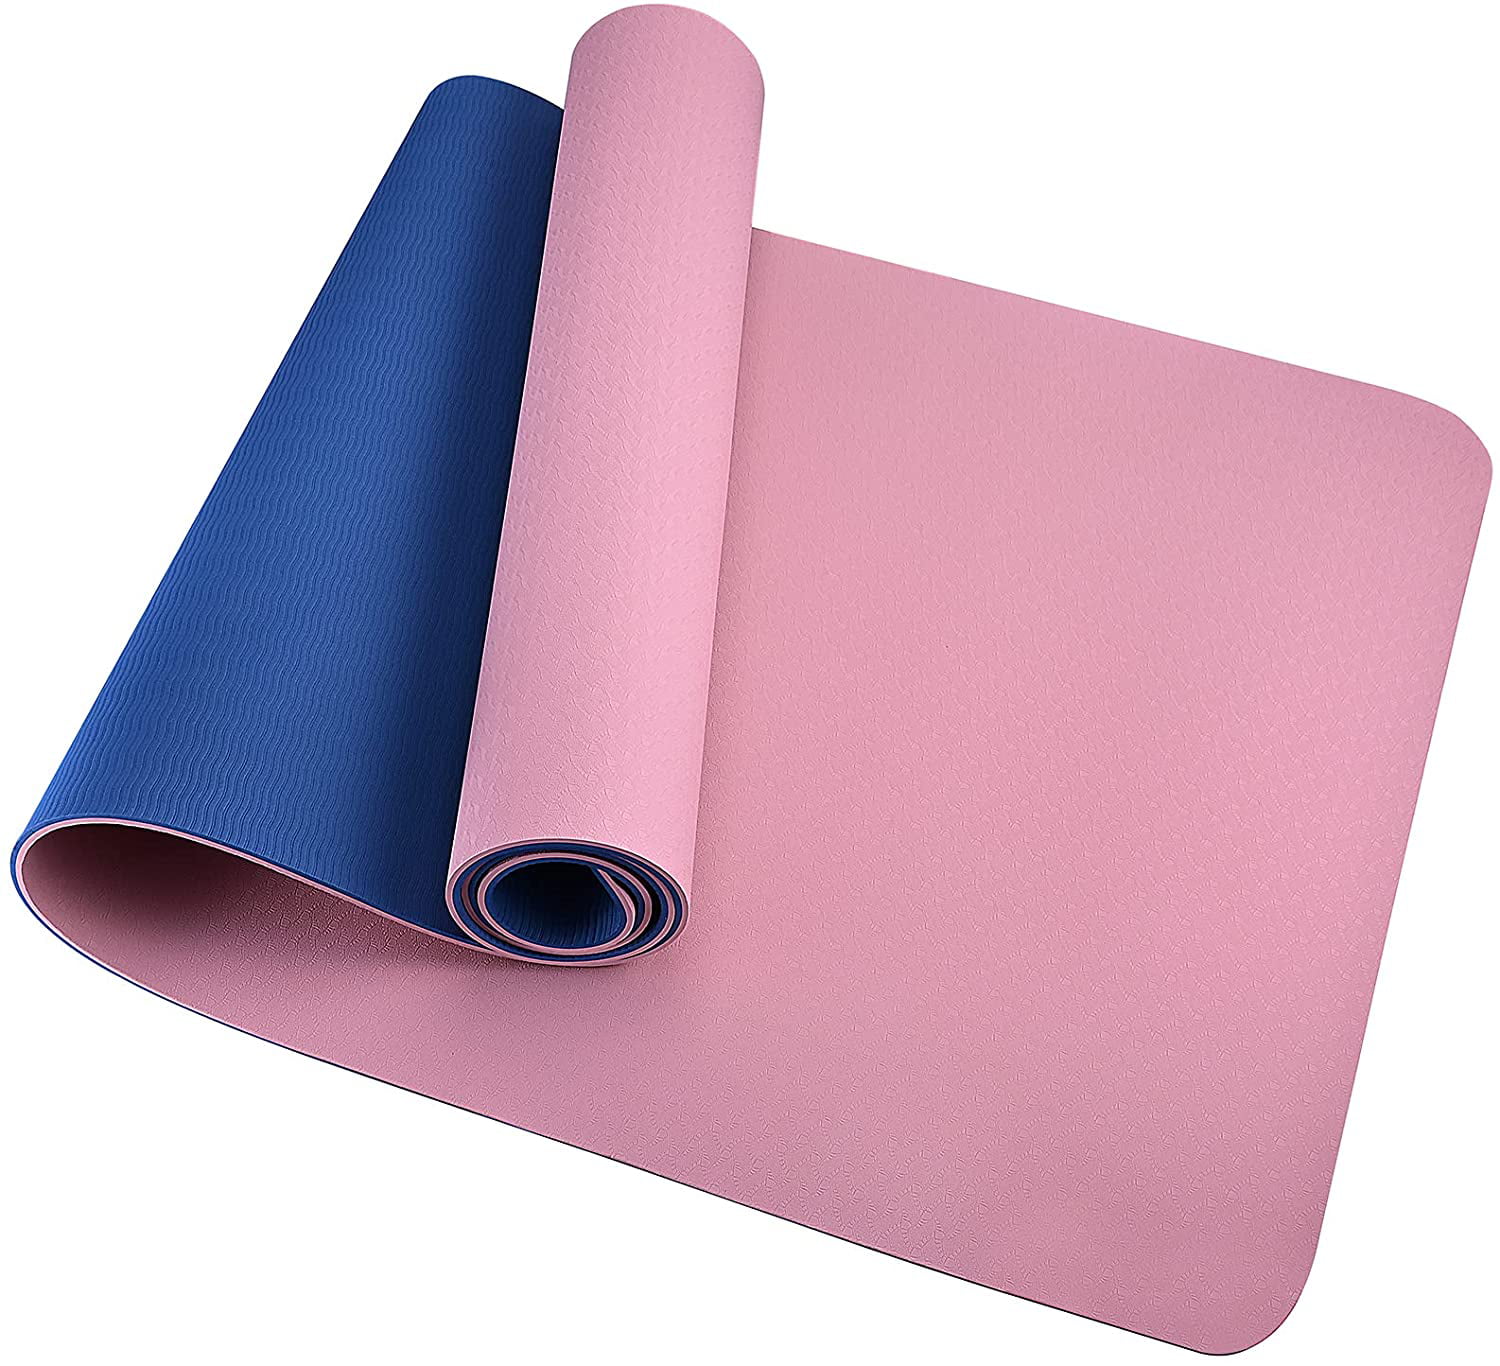 Gaiam Print Yoga Mat Pink Marrakesh 4Mm Non-Slip Lightweight Durable US SELLER 